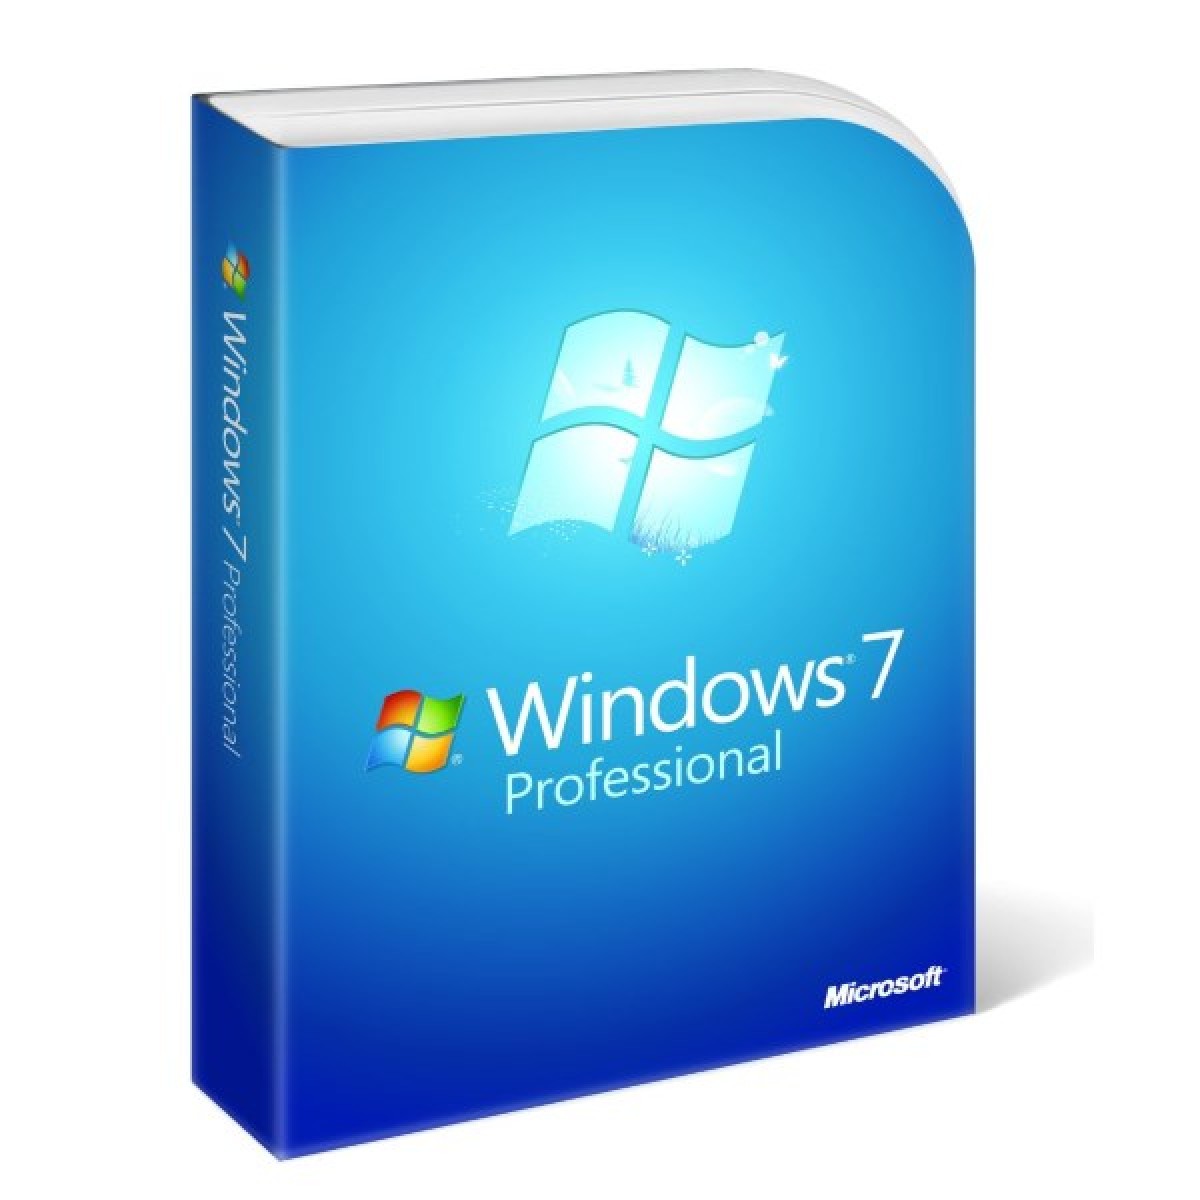 Windows 7 32 Bit Ultimate Product Key Generator